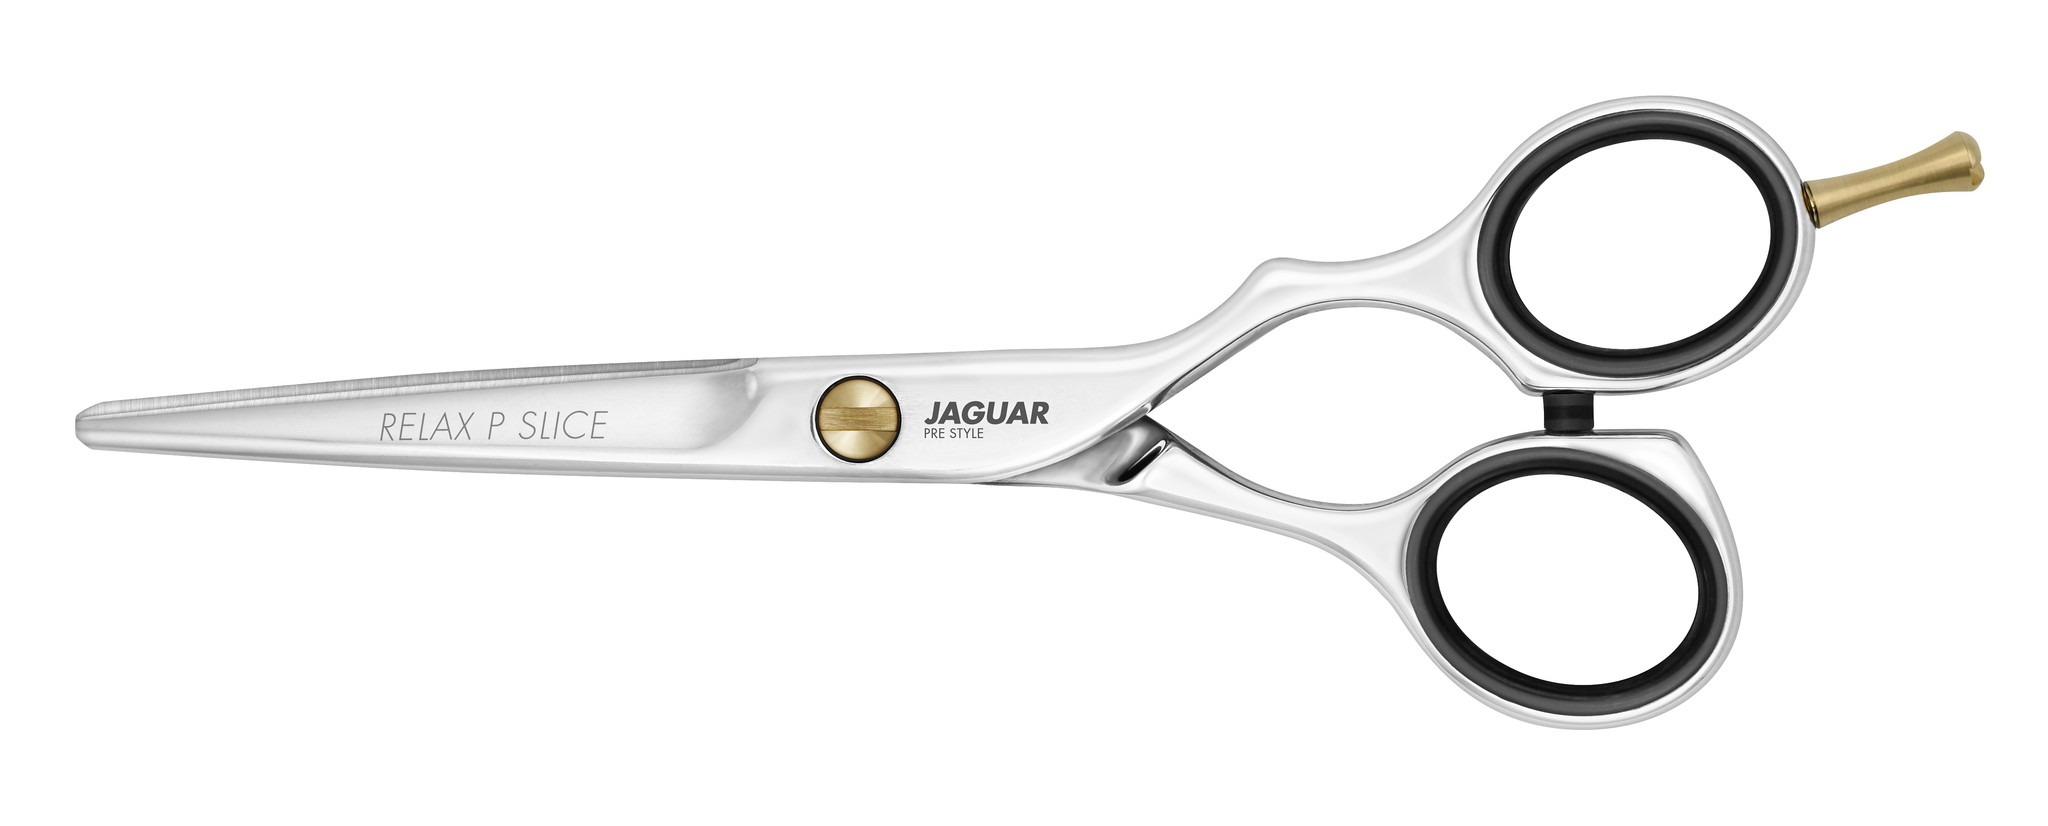 jaguar Pre Style Relax P Slice